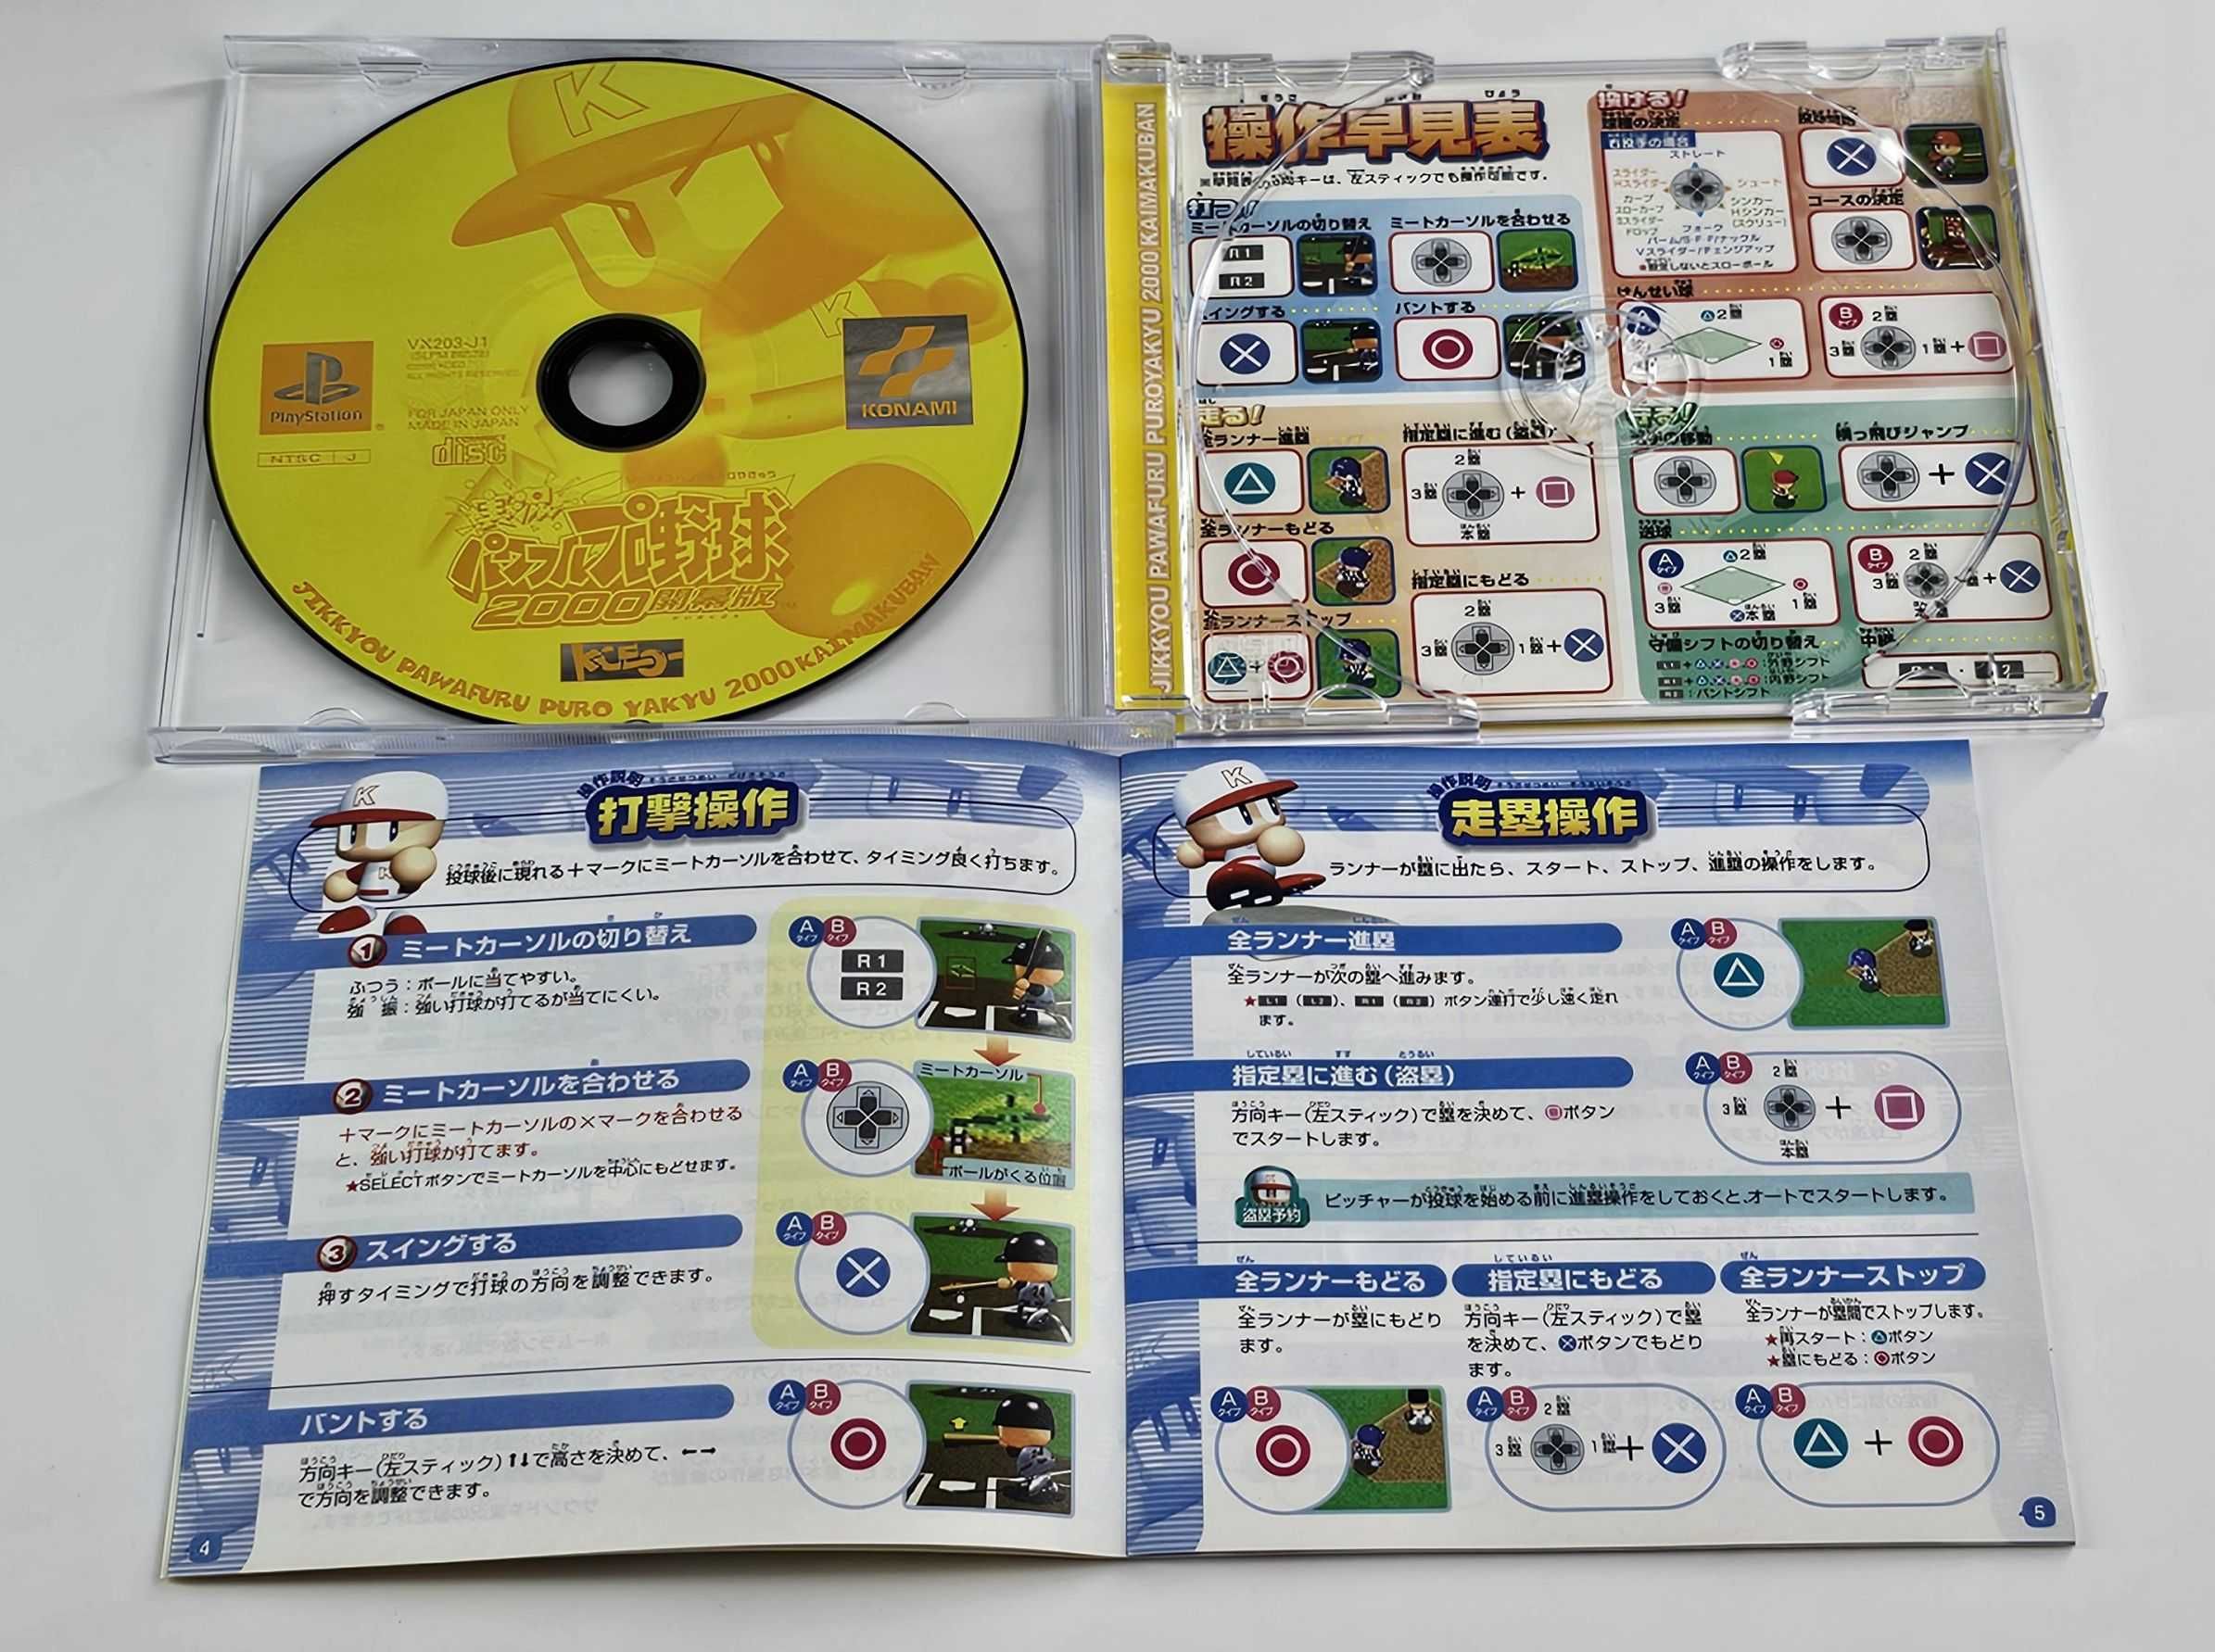 Jikkyou Pawafuru Puroyakyu 2000 Kaimakuban  weekendowa promocja na gry